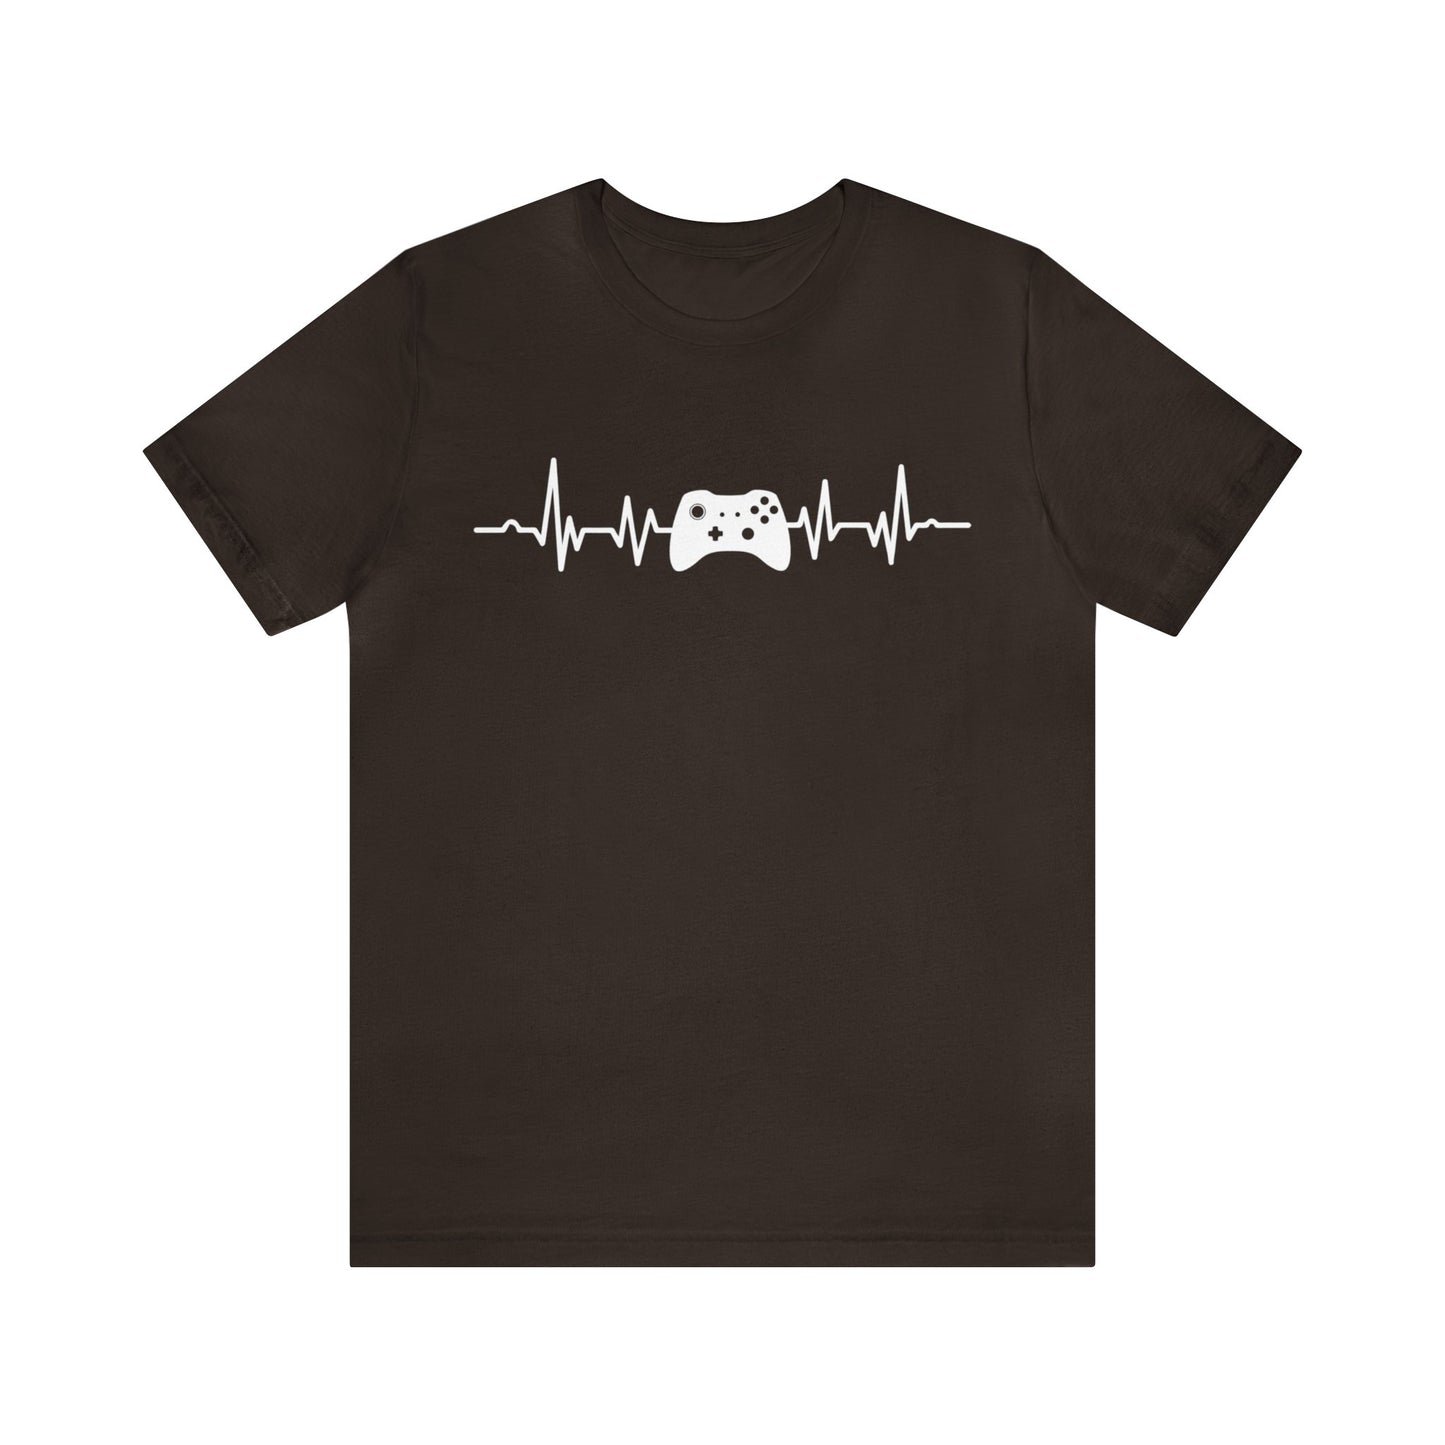 Gaming Heartbeat Tshirt, Video Gamer Controller Pulse Designer Graphic Aesthetic Crewneck Adult Men Women Tee Top Short Sleeve Shirt